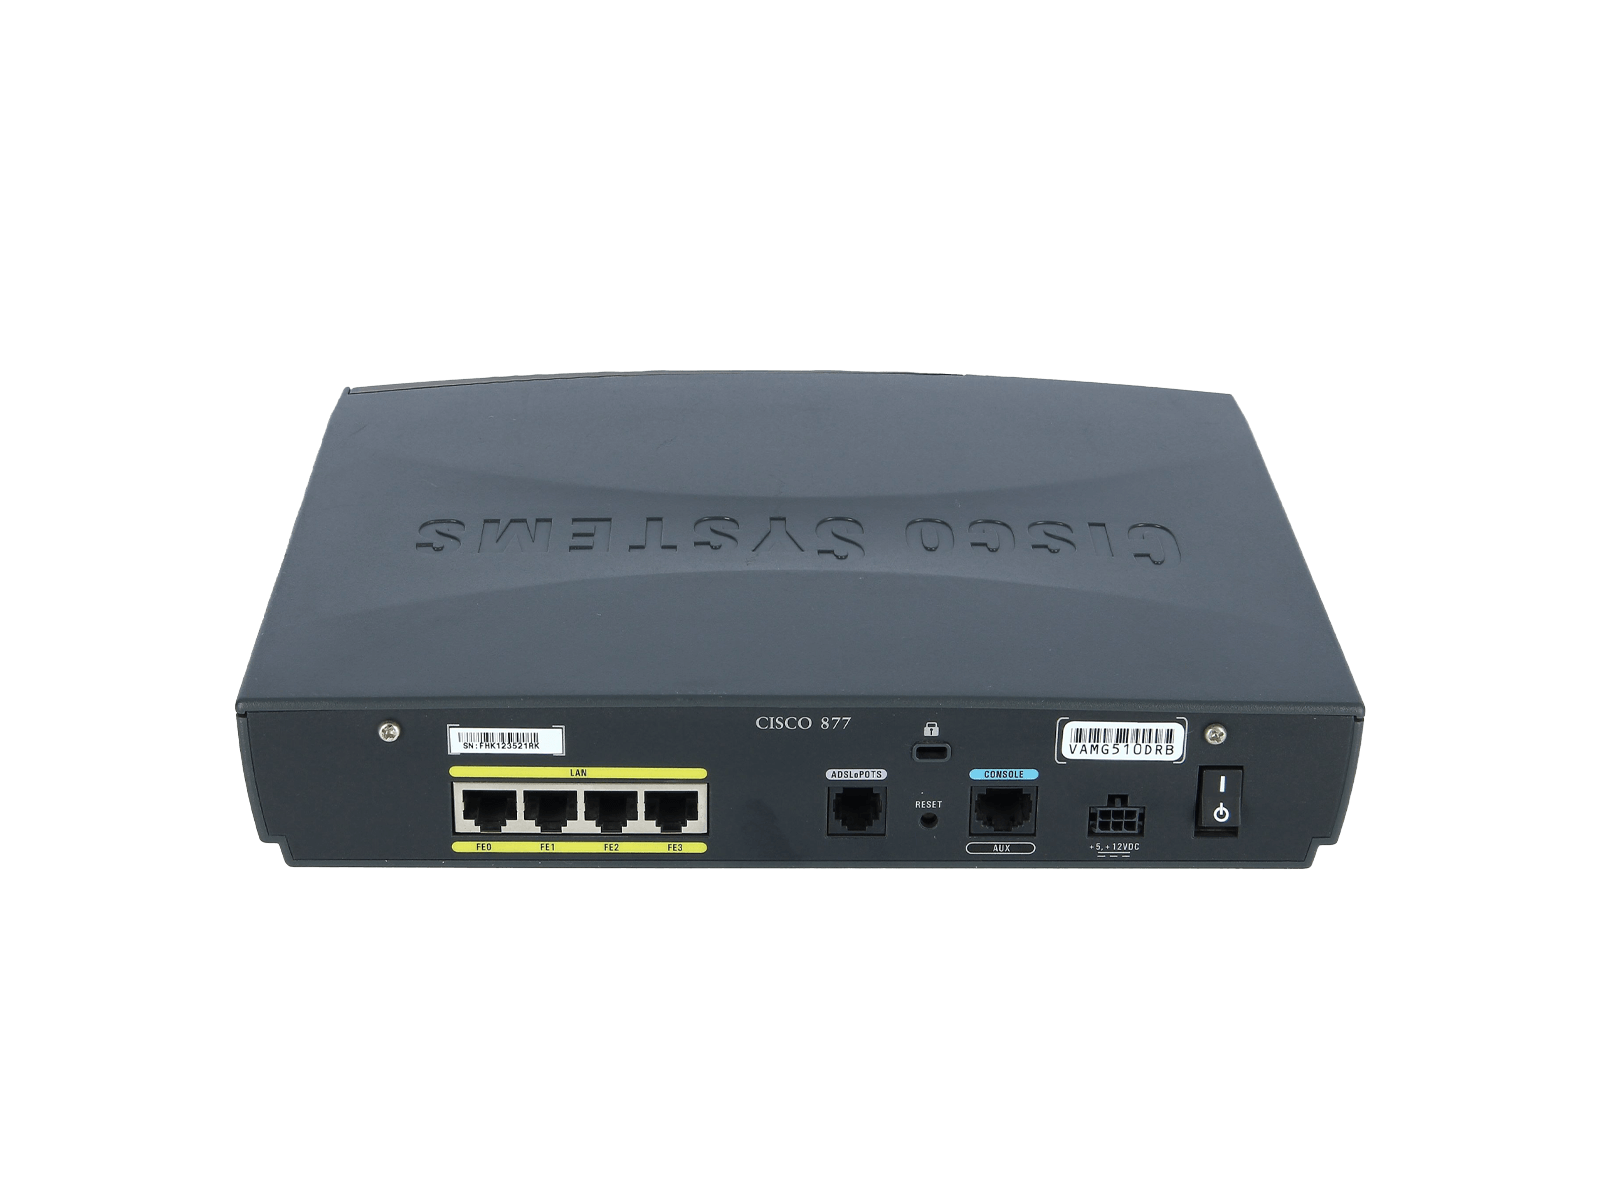 Cisco 877 CISCO877-SEC-K9 ADSL Integrated Services Router.